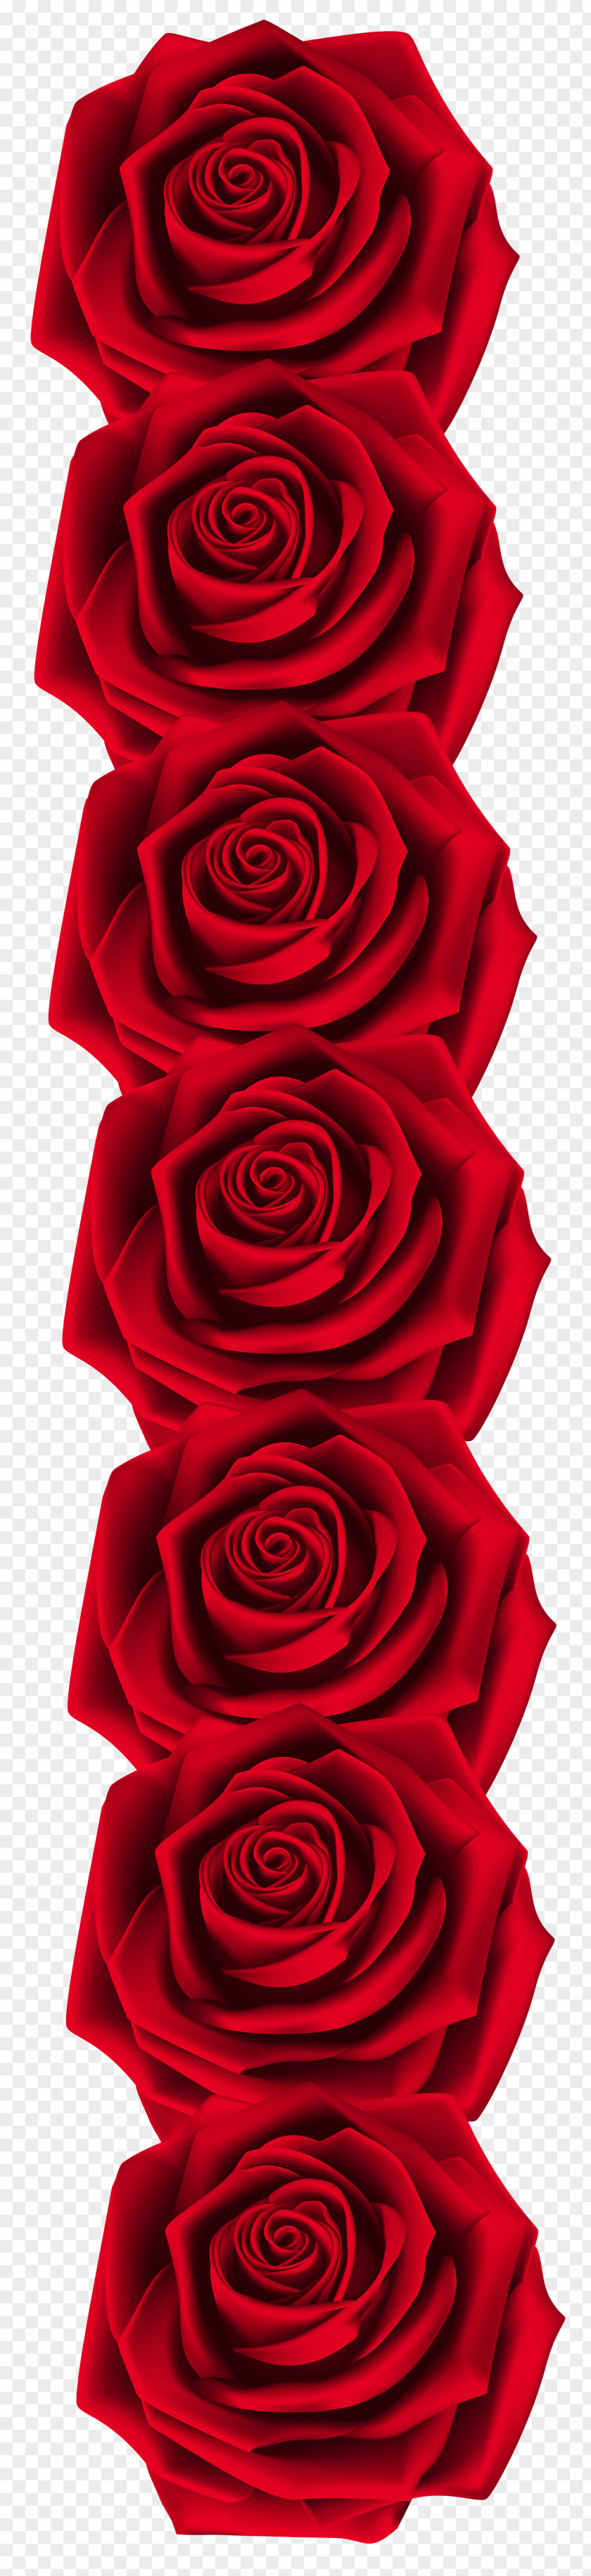 Red Roses Decoration Transparent Clip Art Image Garden PNG